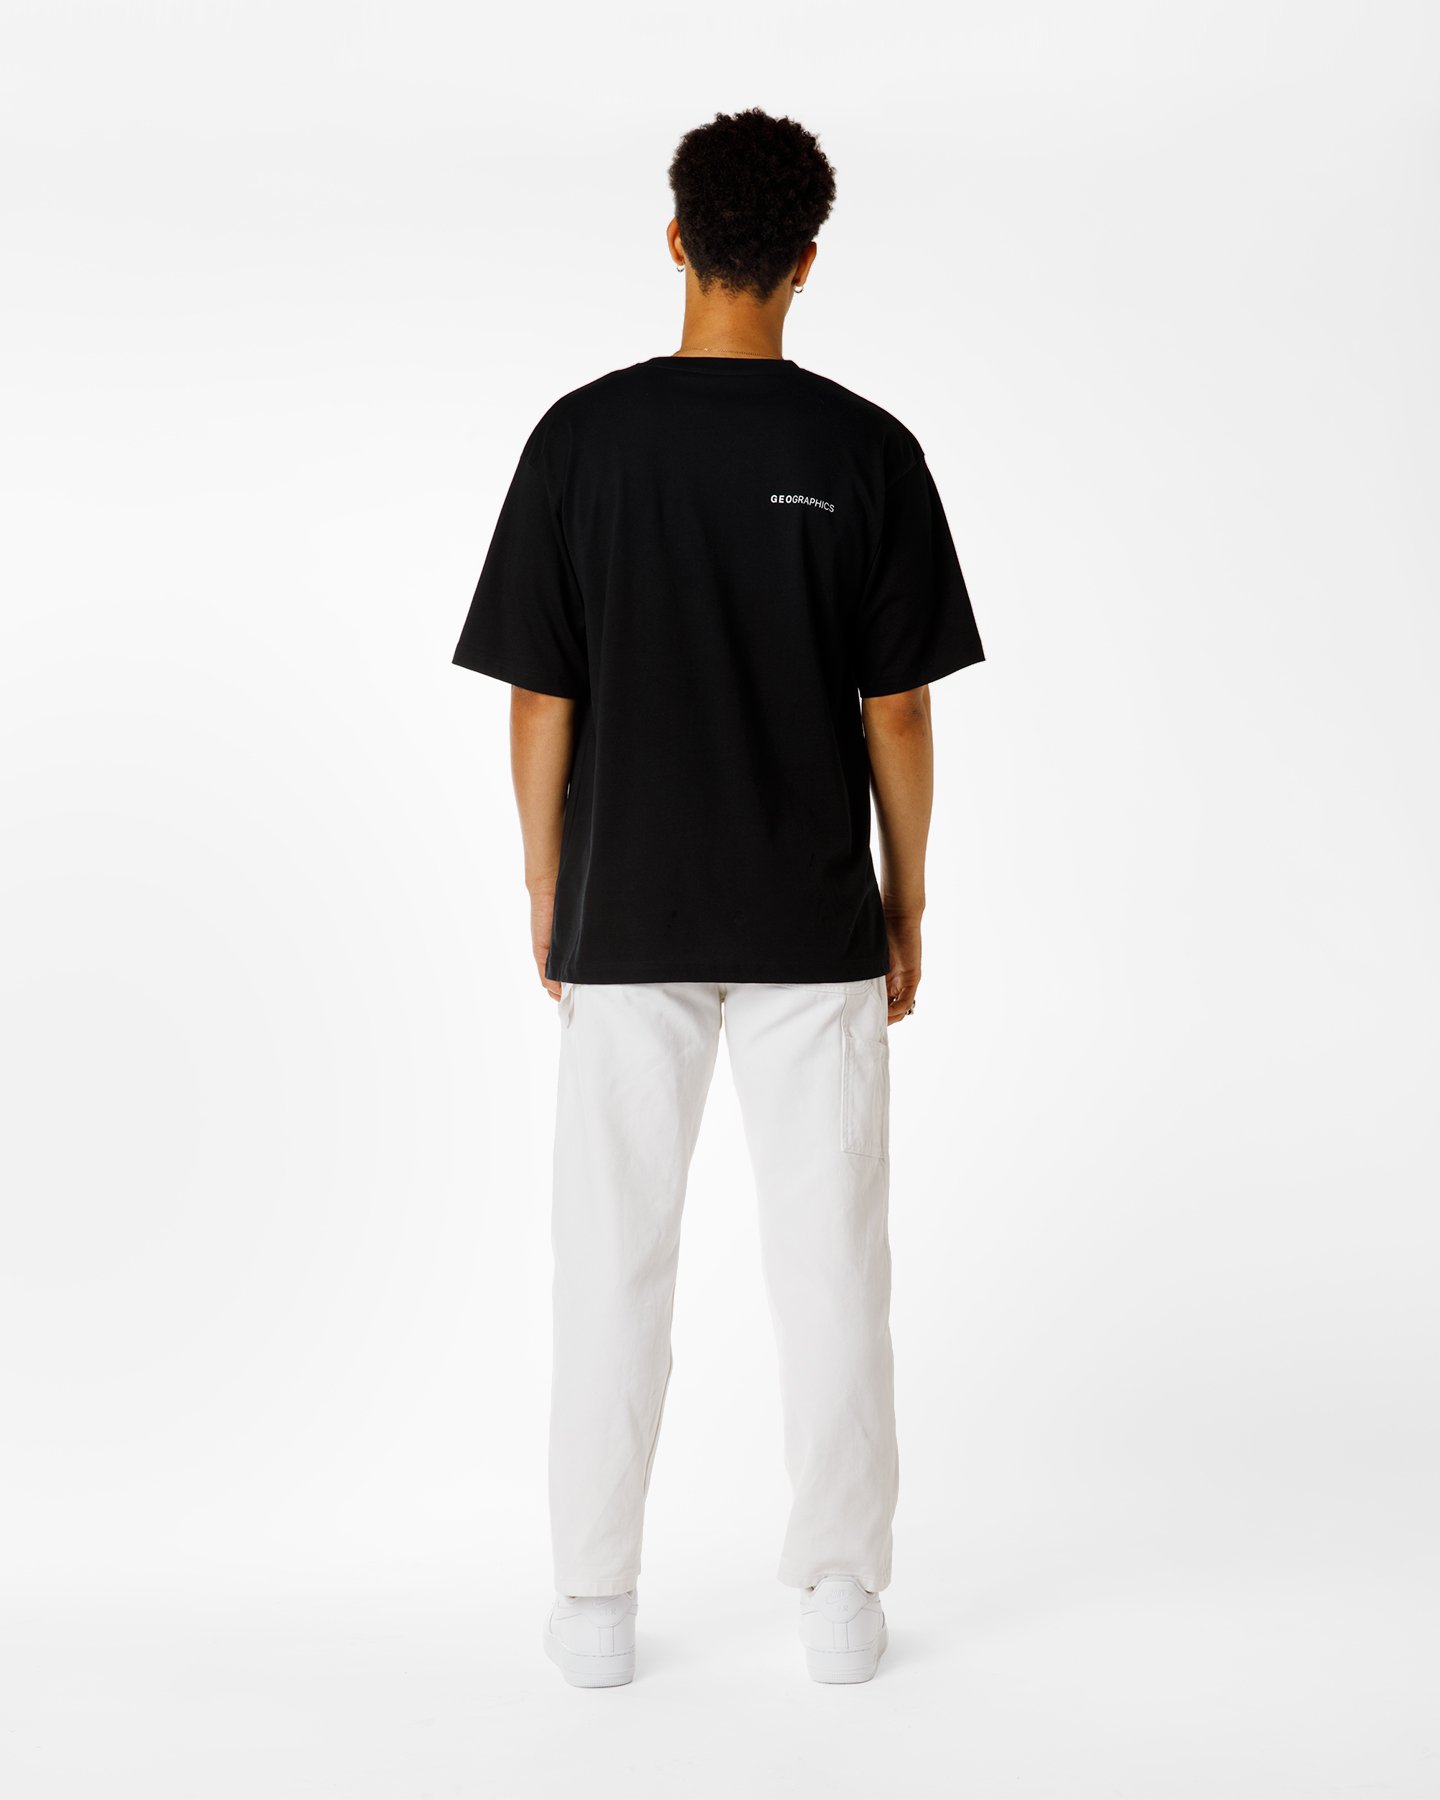 GEO - European Dream T-Shirt - Clothing - Black - Image 6